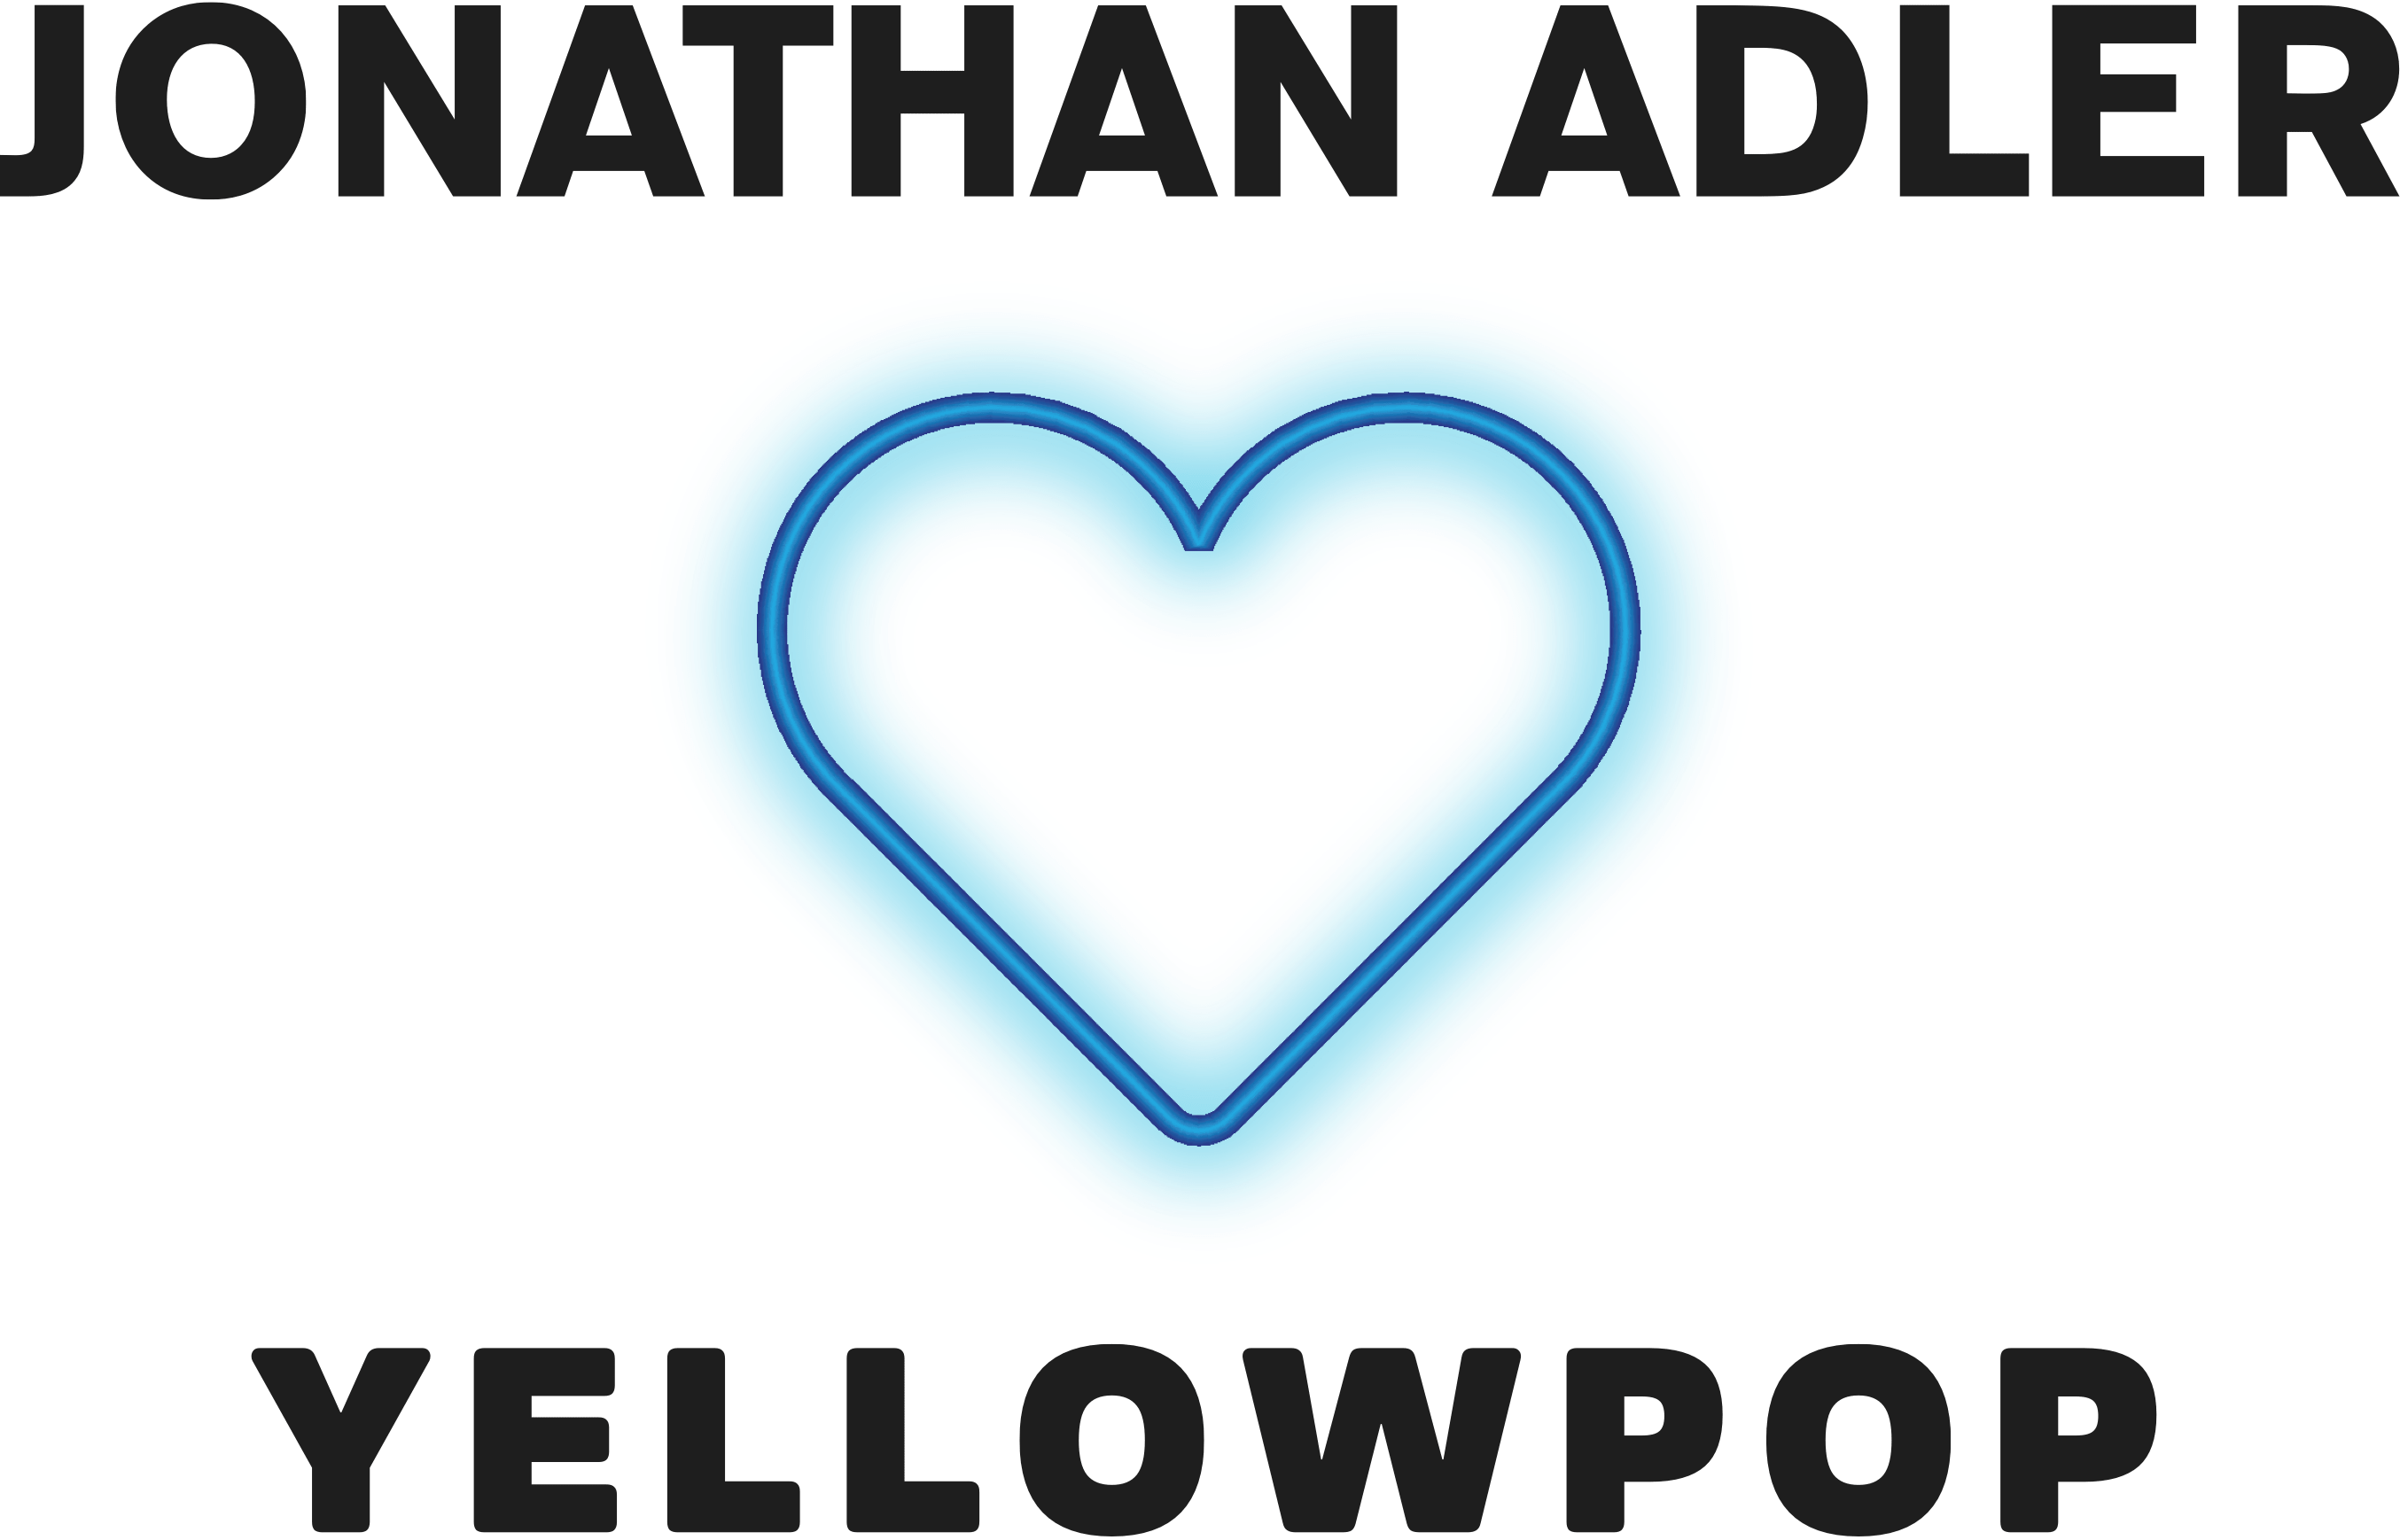 Jonathan Adler x Yellowpop